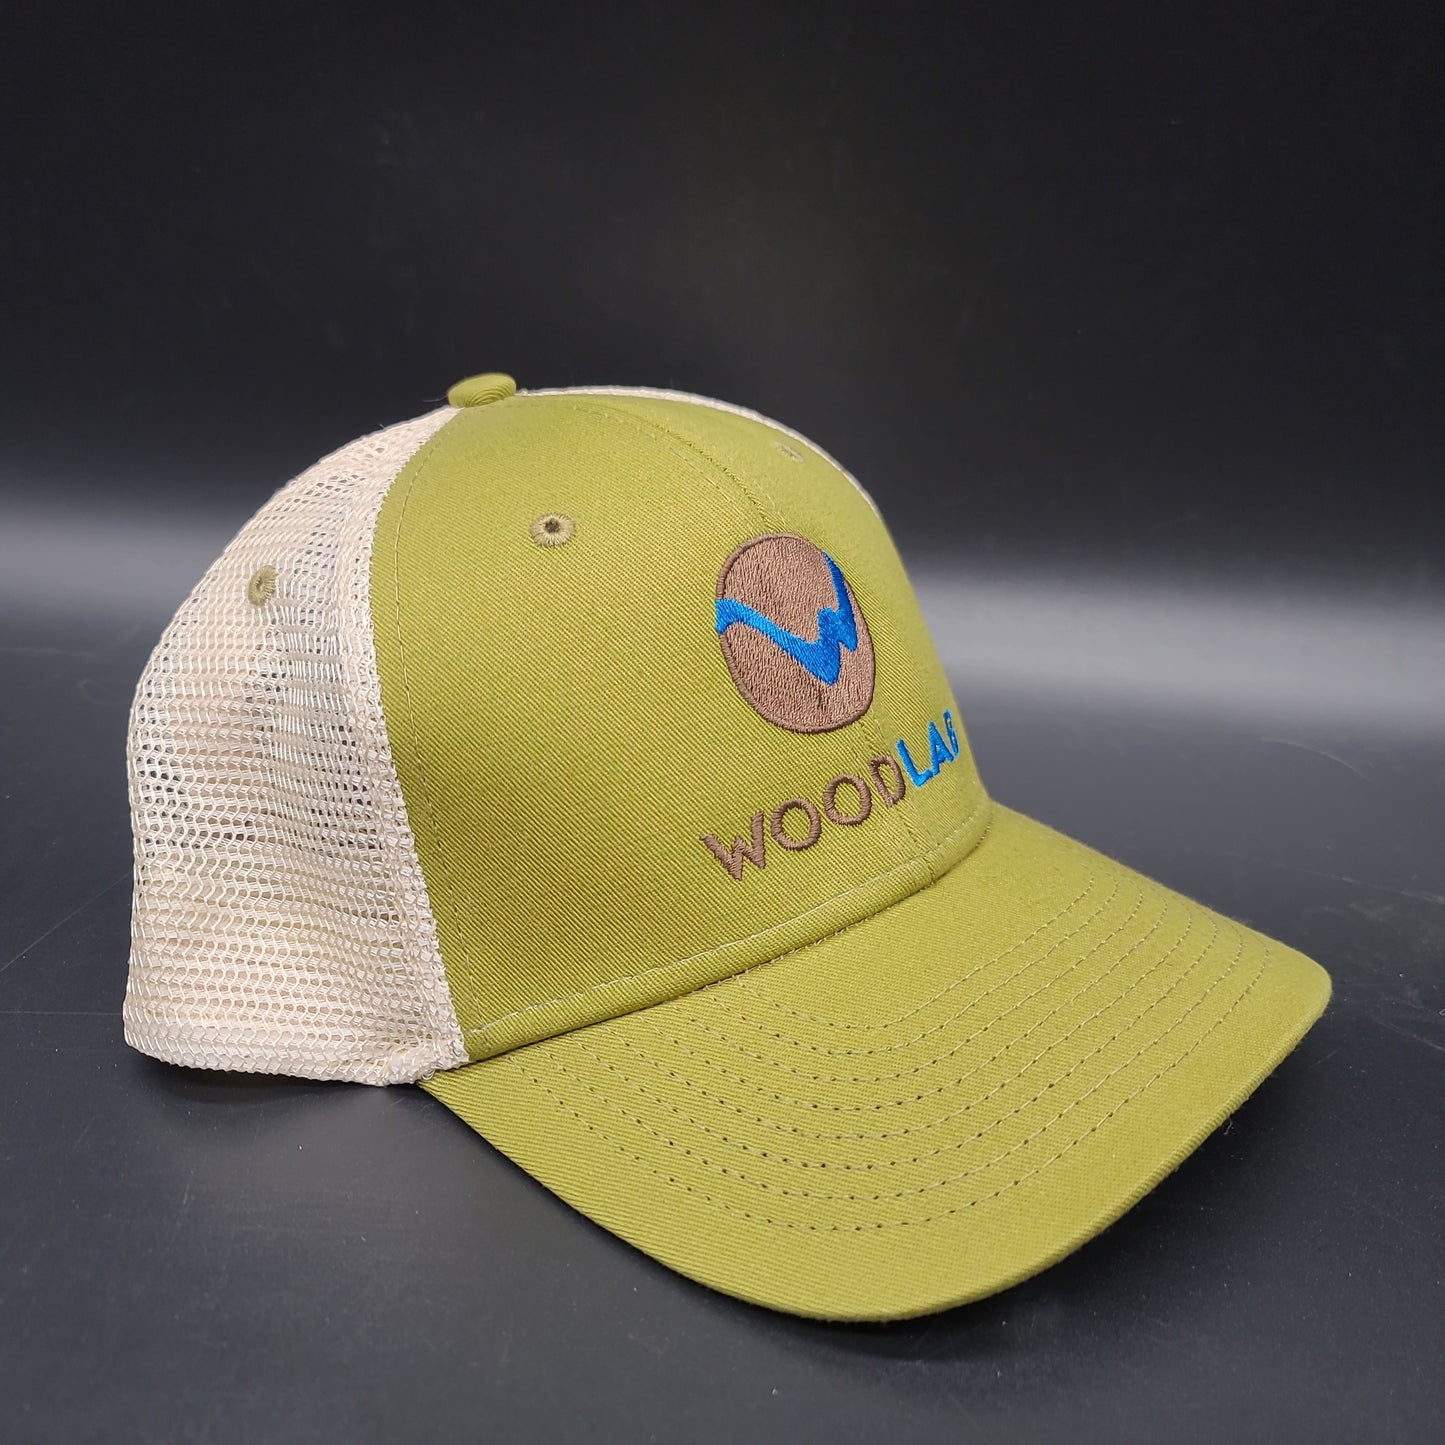 WoodLab Baseball Caps